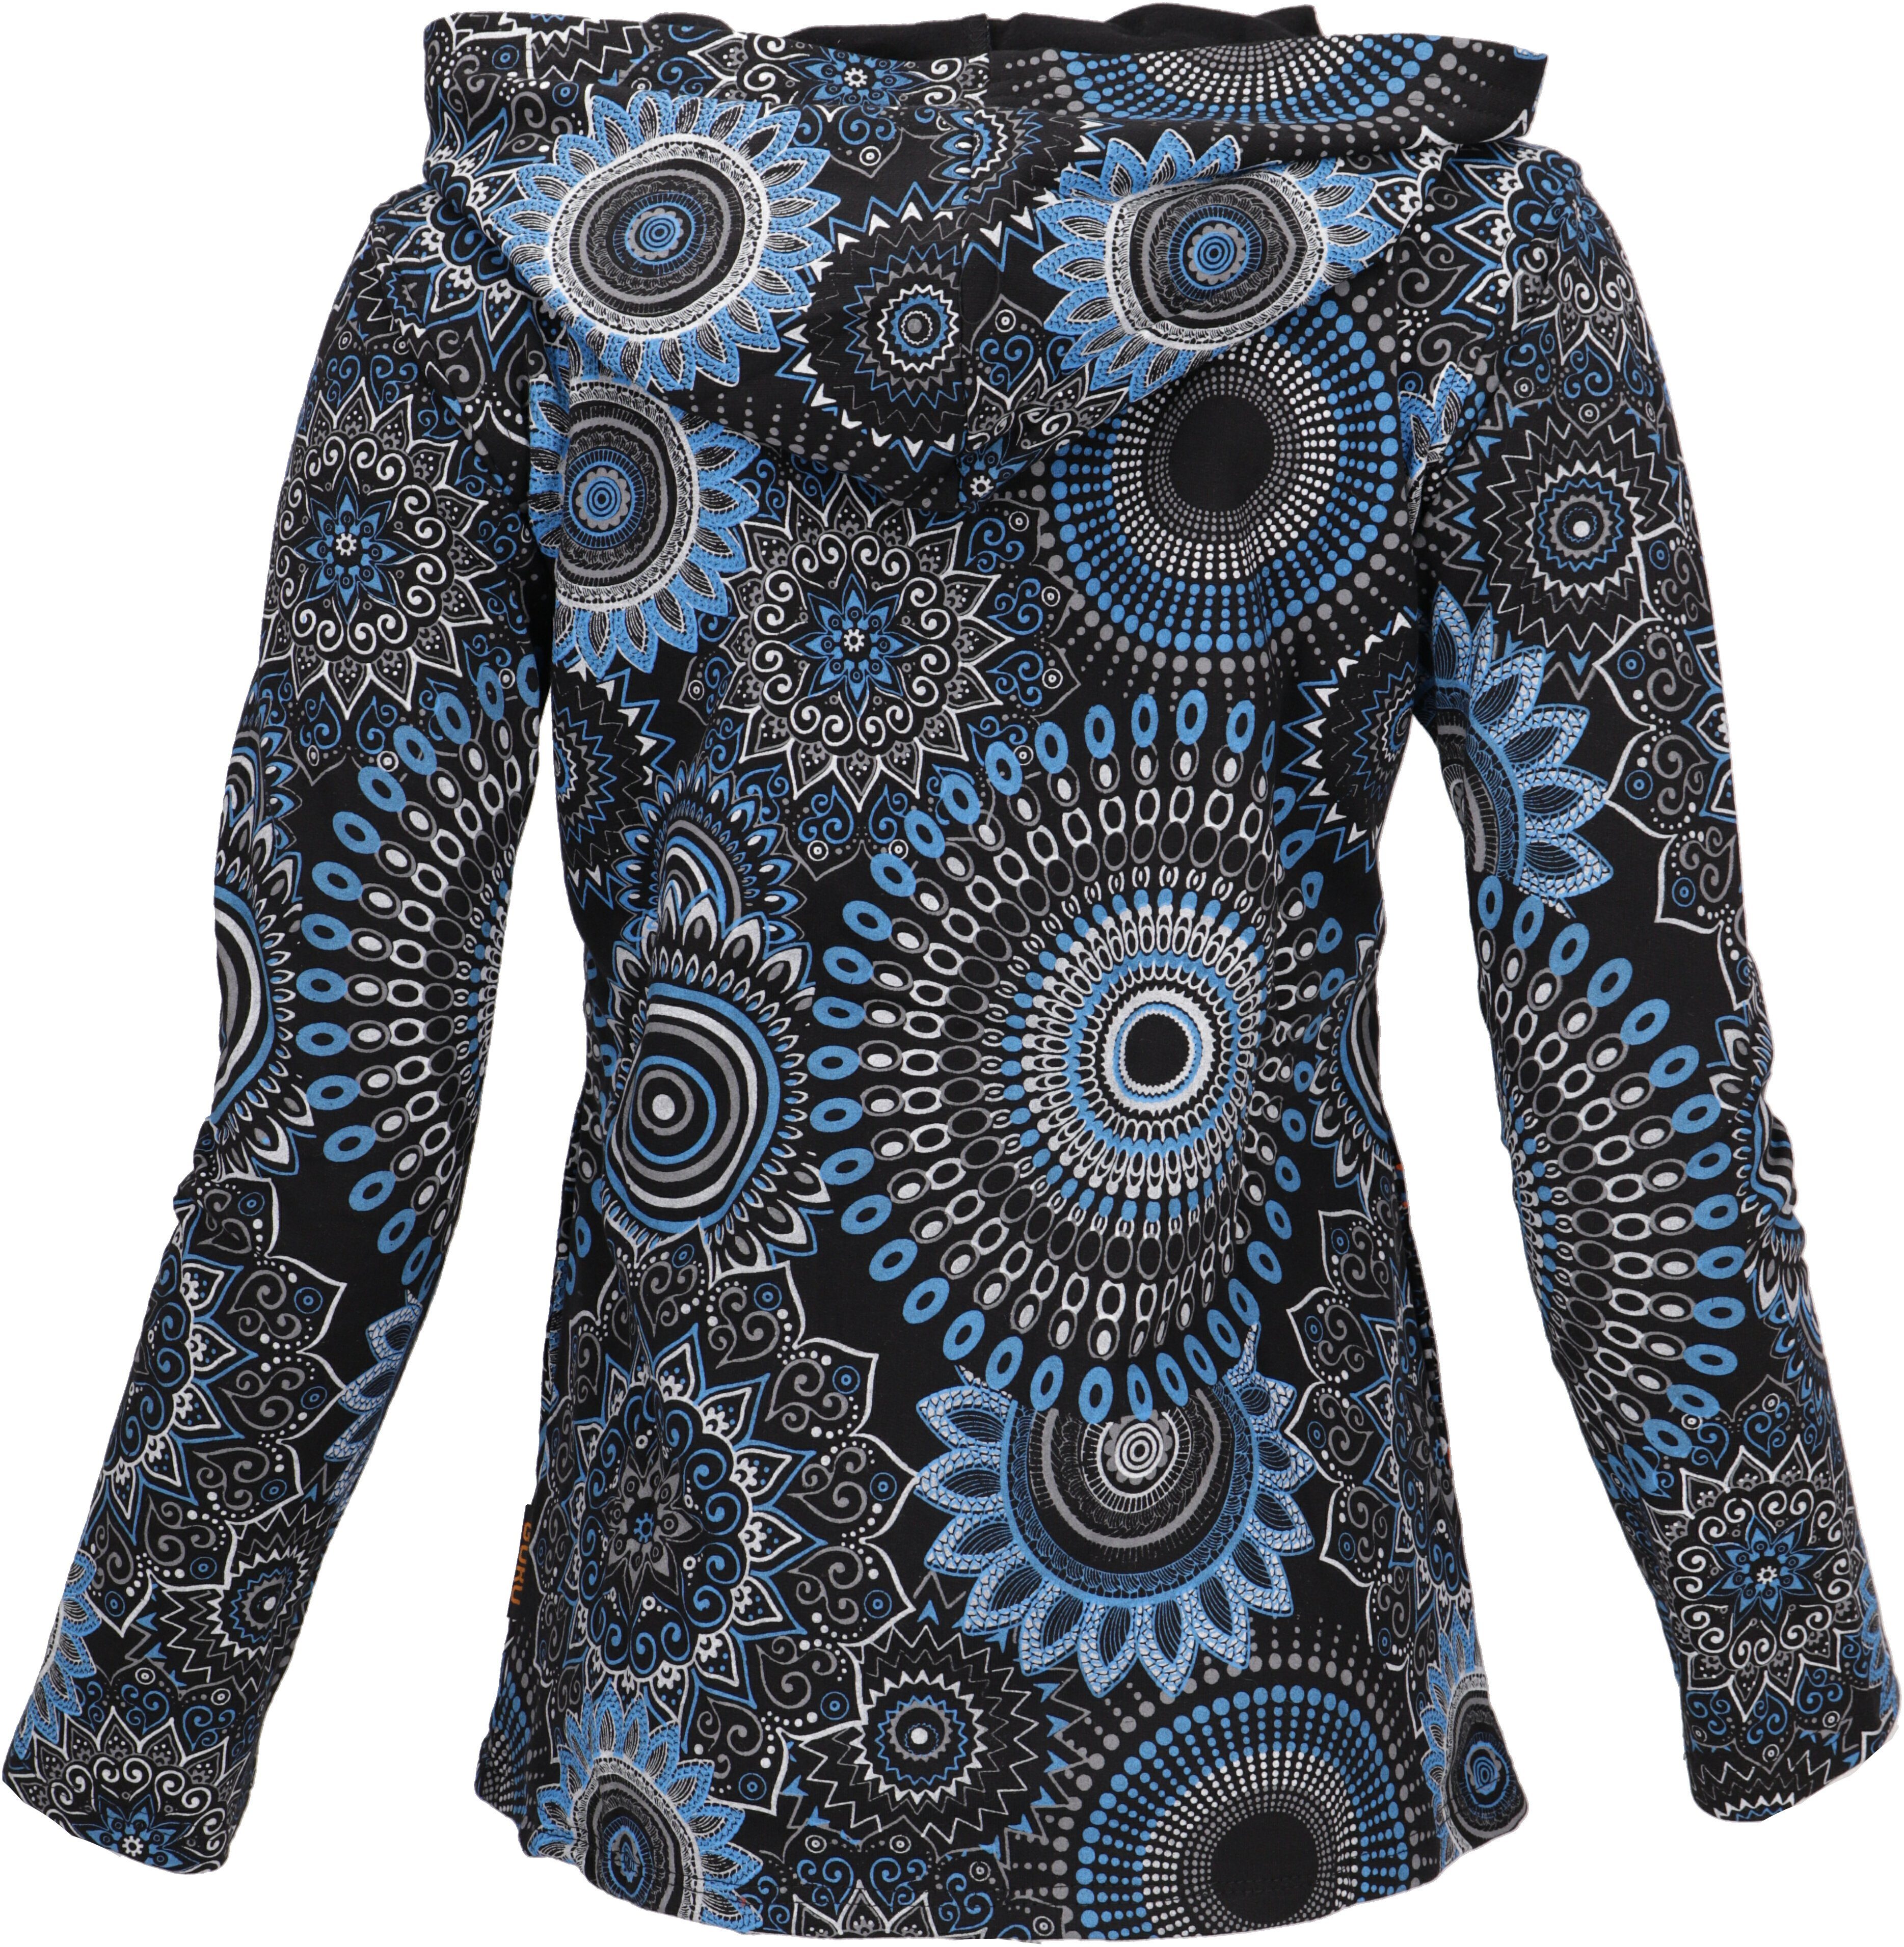 schwarz/blau Jacke chic -.. Bekleidung Boho Hippie Jacke, alternative Langjacke Guru-Shop bestickte